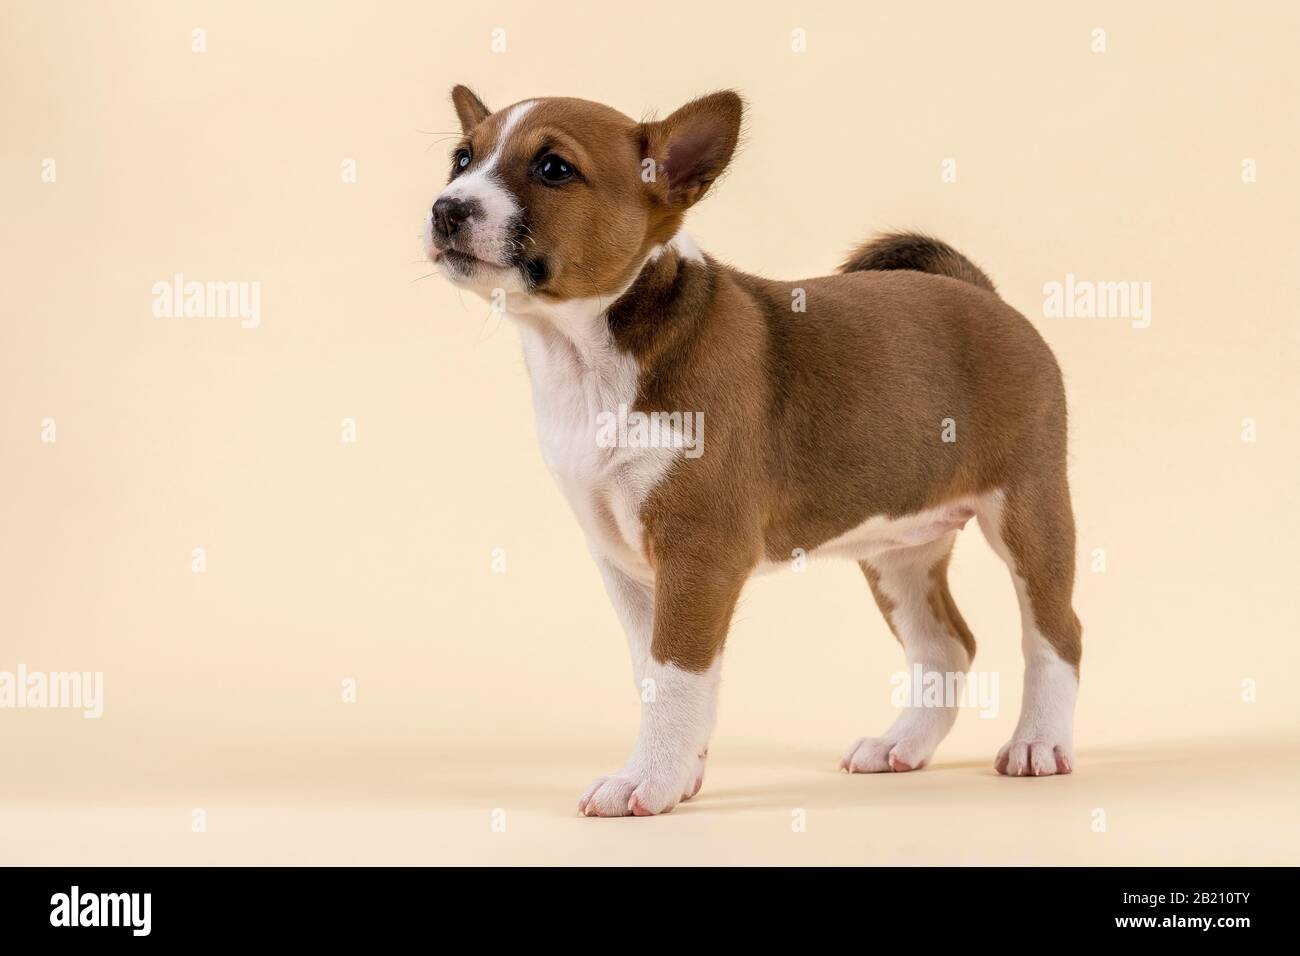 Basenji o Congo Terrier (Canis lupus familiaris), animal joven, 6 semanas, rojo/blanco, de pie, lateral, disparo de estudio con fondo de color arena Foto de stock